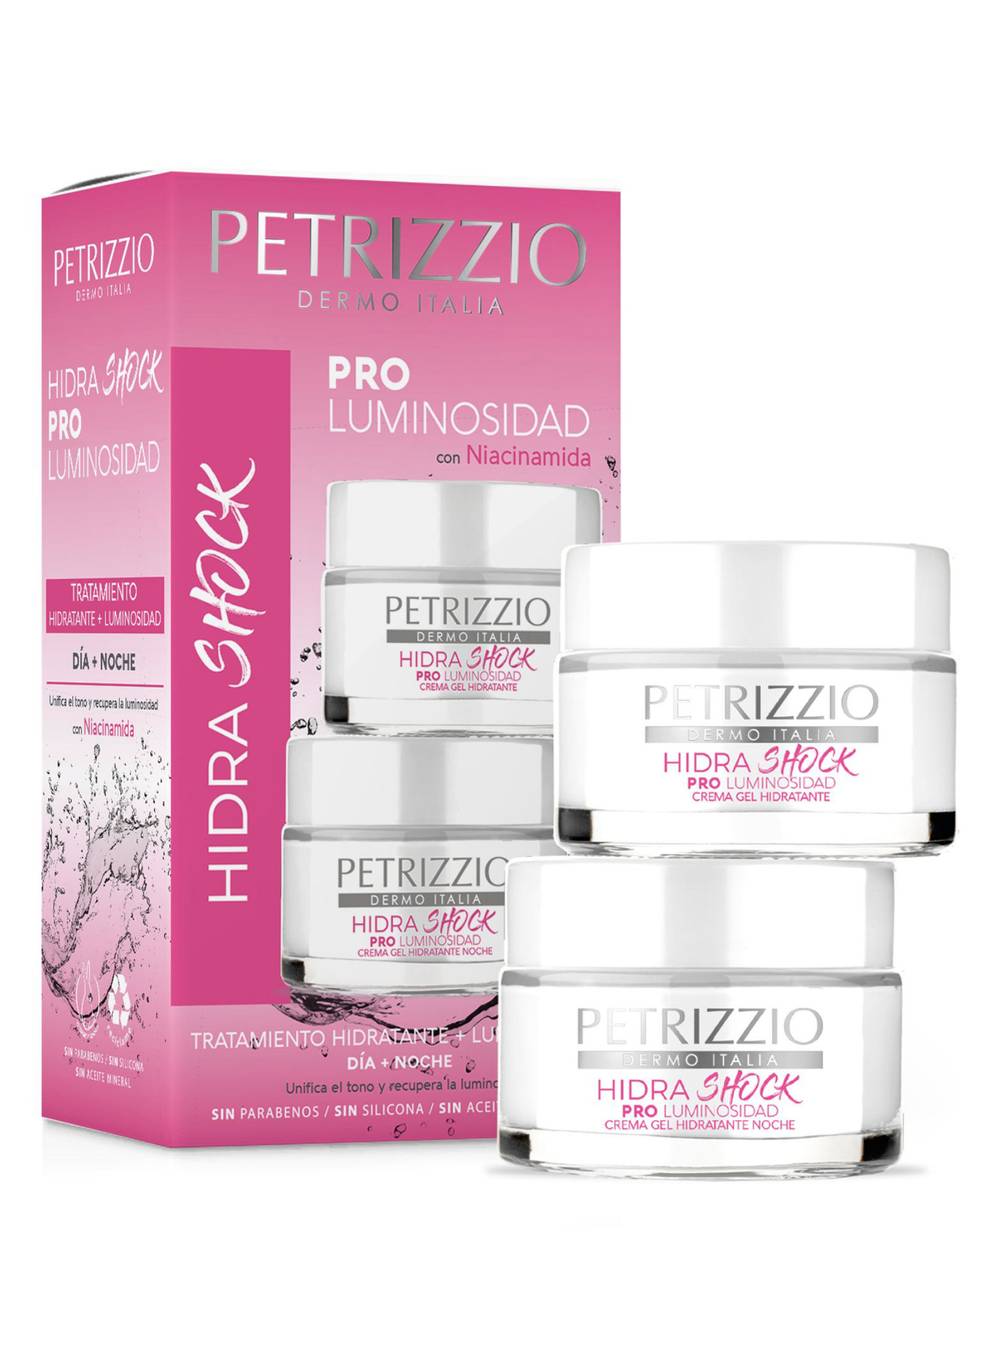 Petrizzio set de cremas hidrashock pro luminosidad (pack 50 ml + 50 ml)